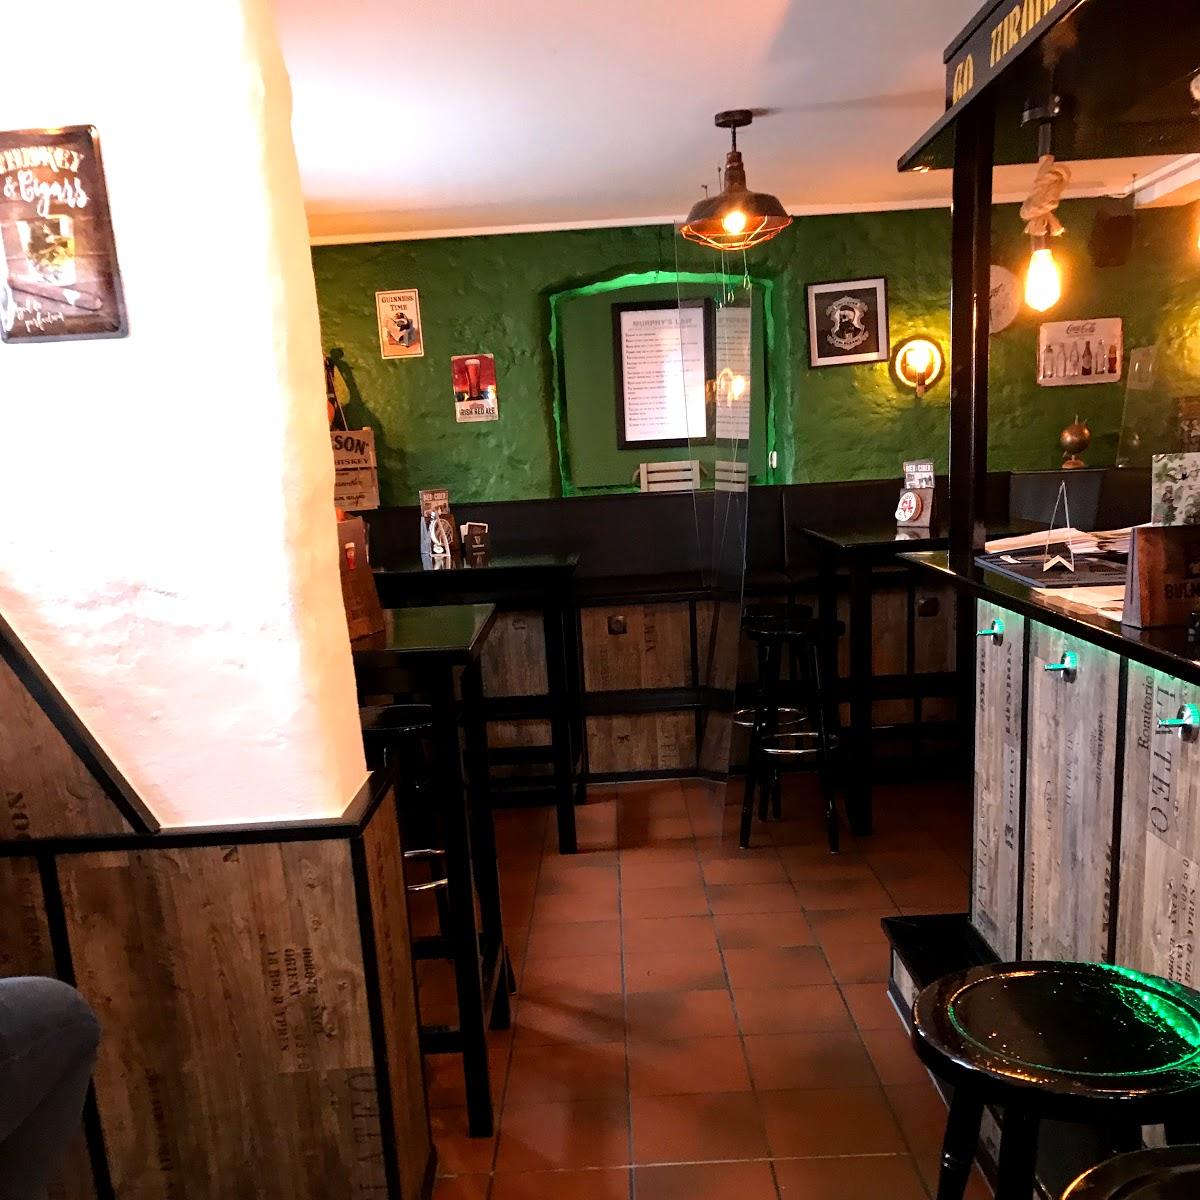 Restaurant "Murphys Law Irish Pub" in Cham